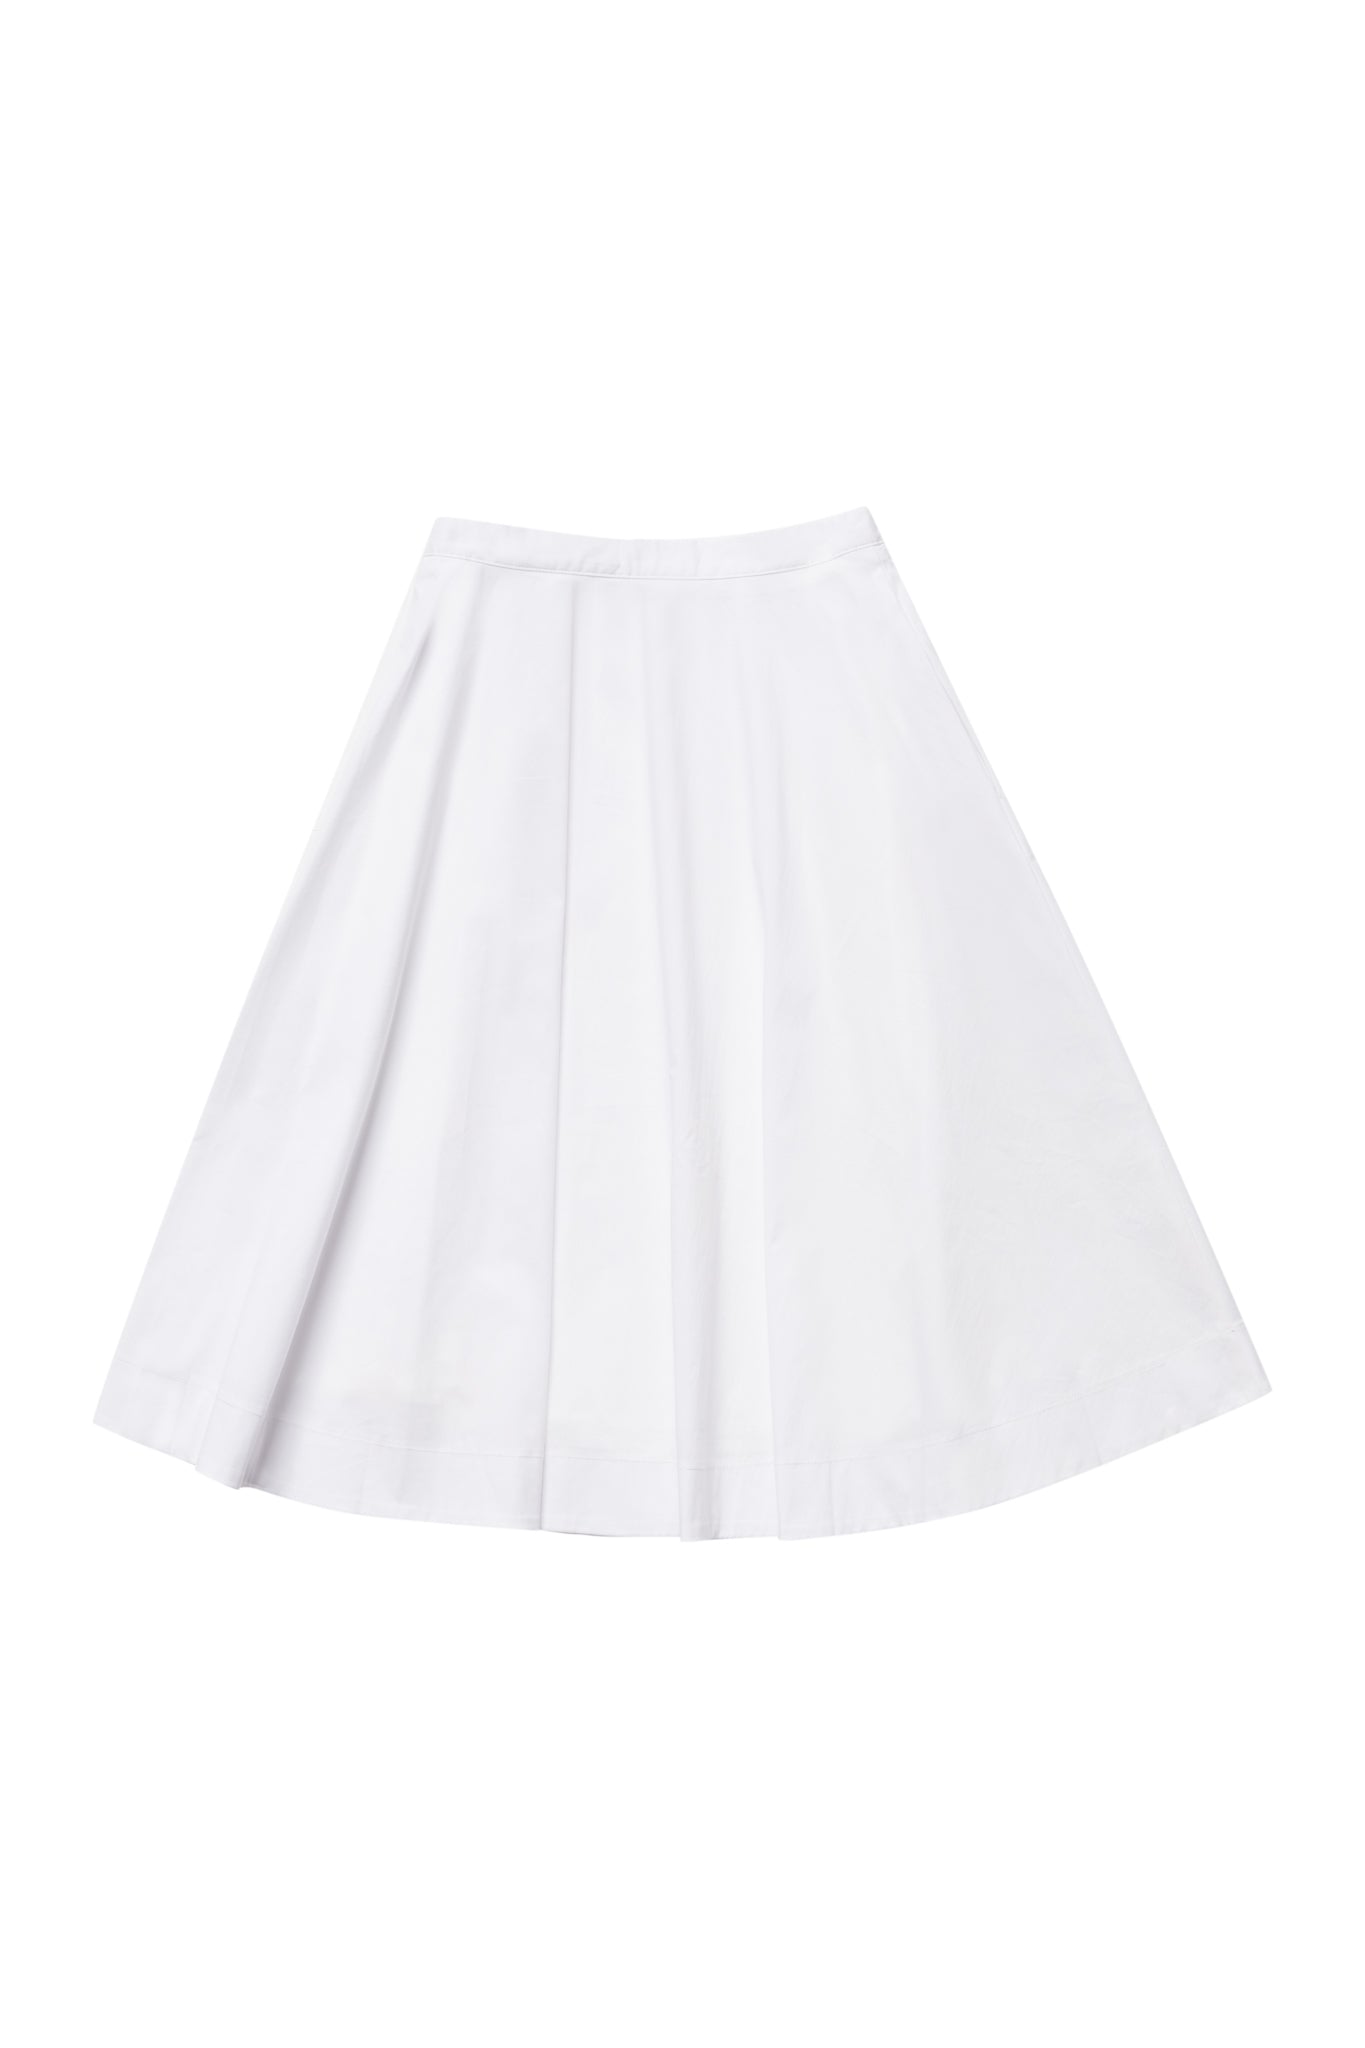 Naomi Skirt in White #7945